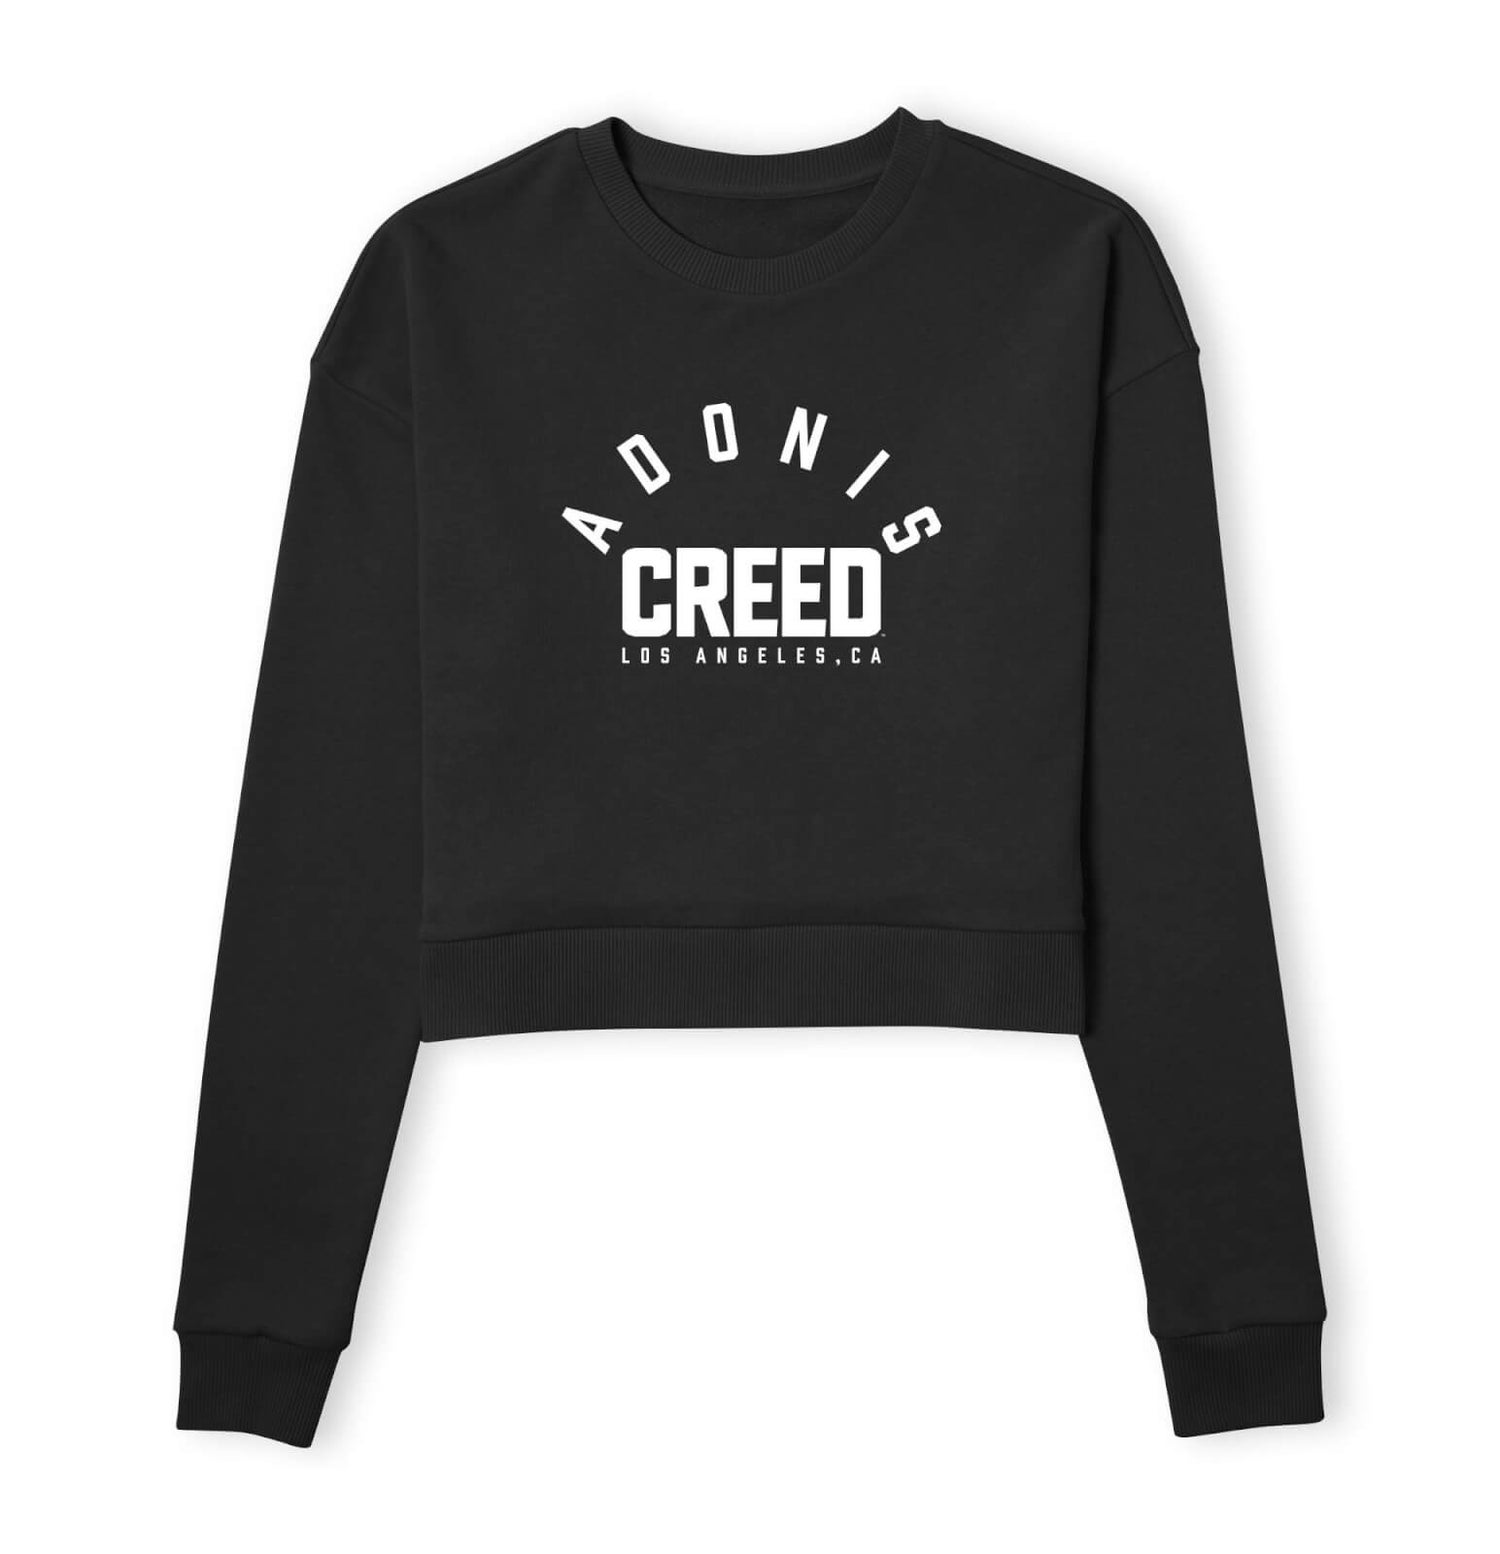 Creed Adonis Creed LA Women's Cropped Sweatshirt - Black - XS